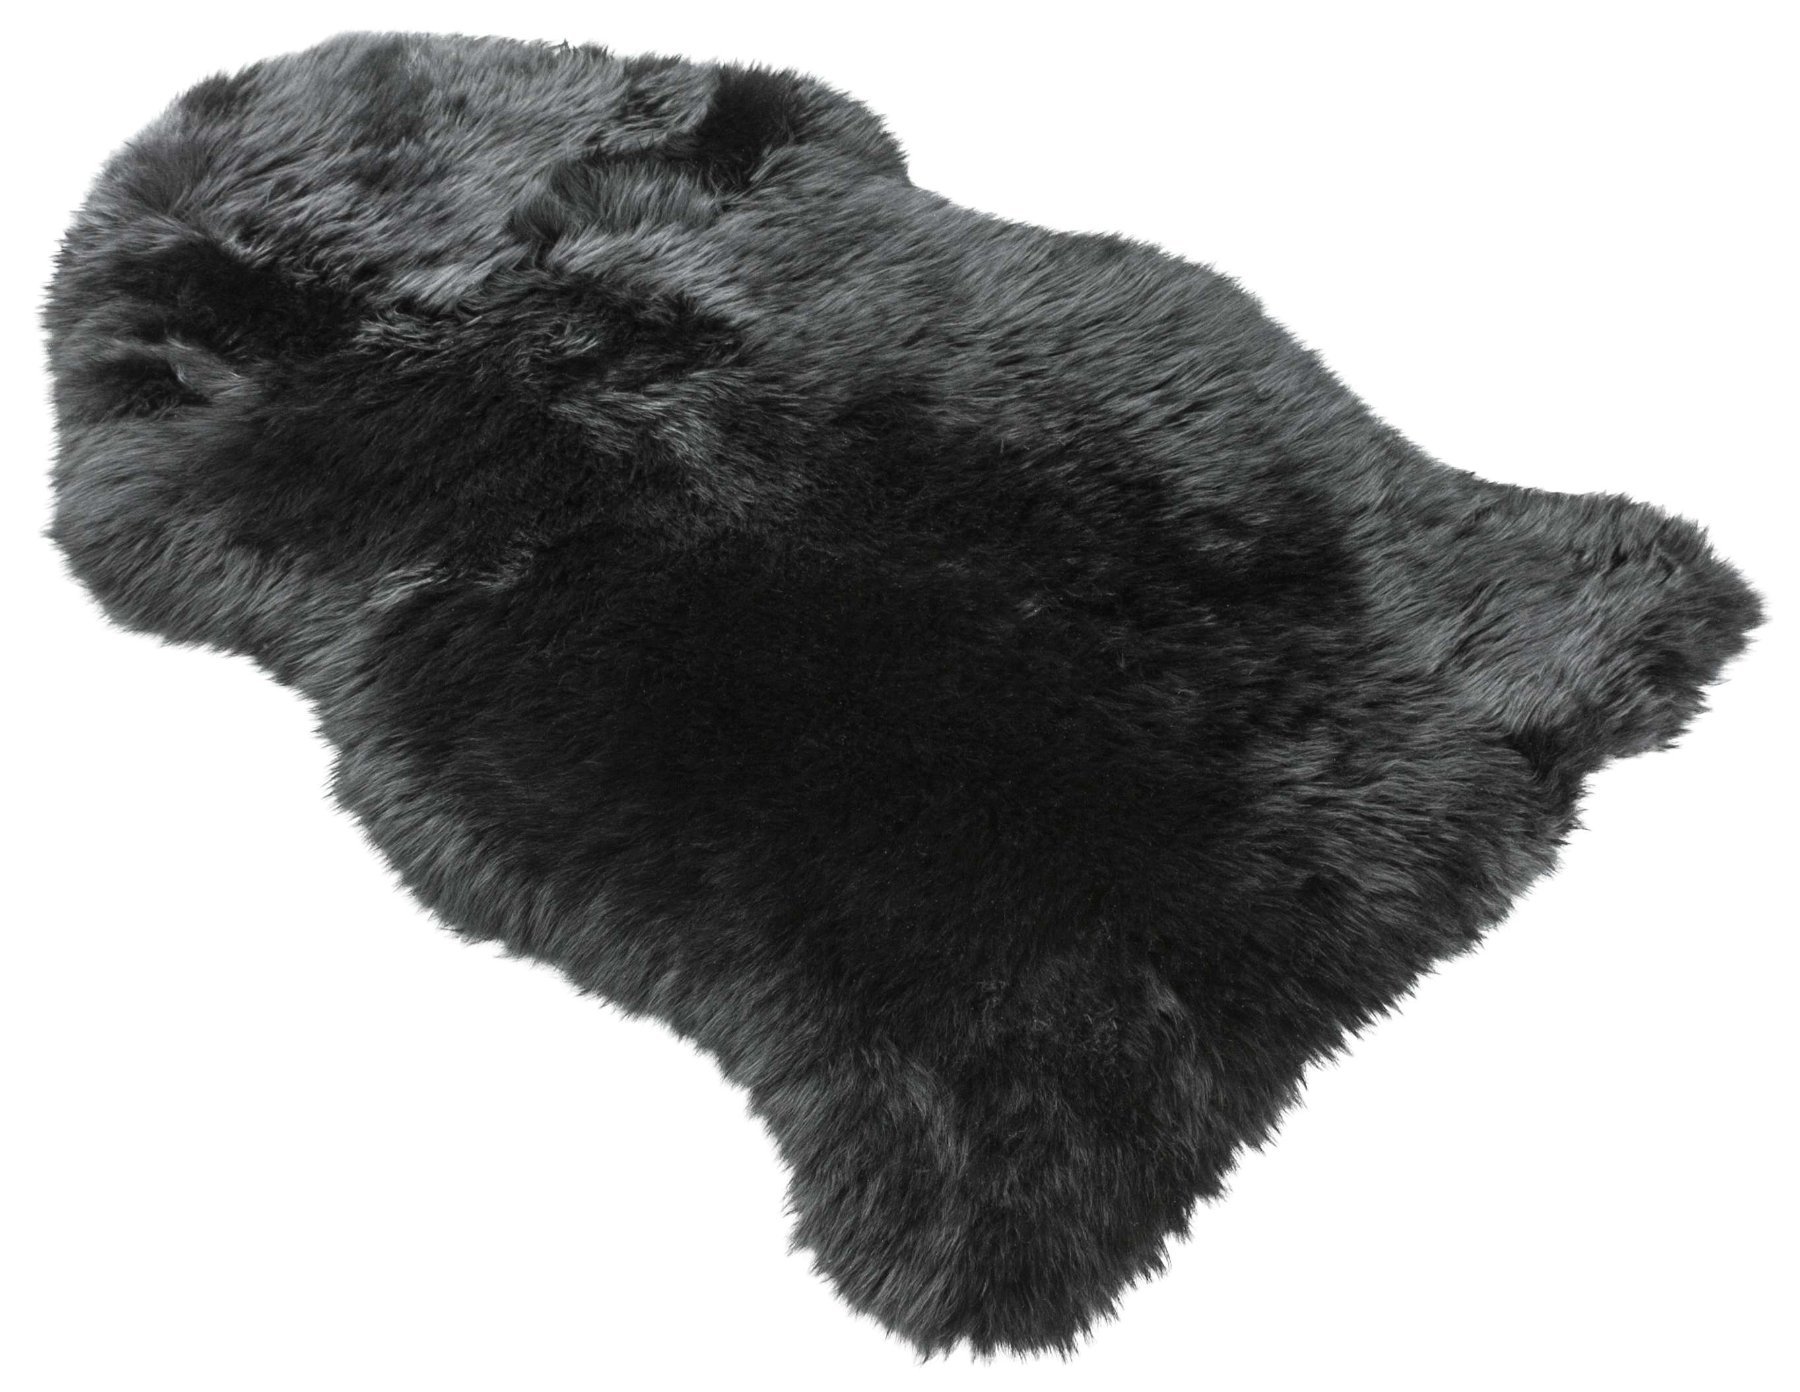 Lambskin rug Blake black 80-90cm made of 100% natural lambskin, wool height 50mm, ideal in living room & bedroom